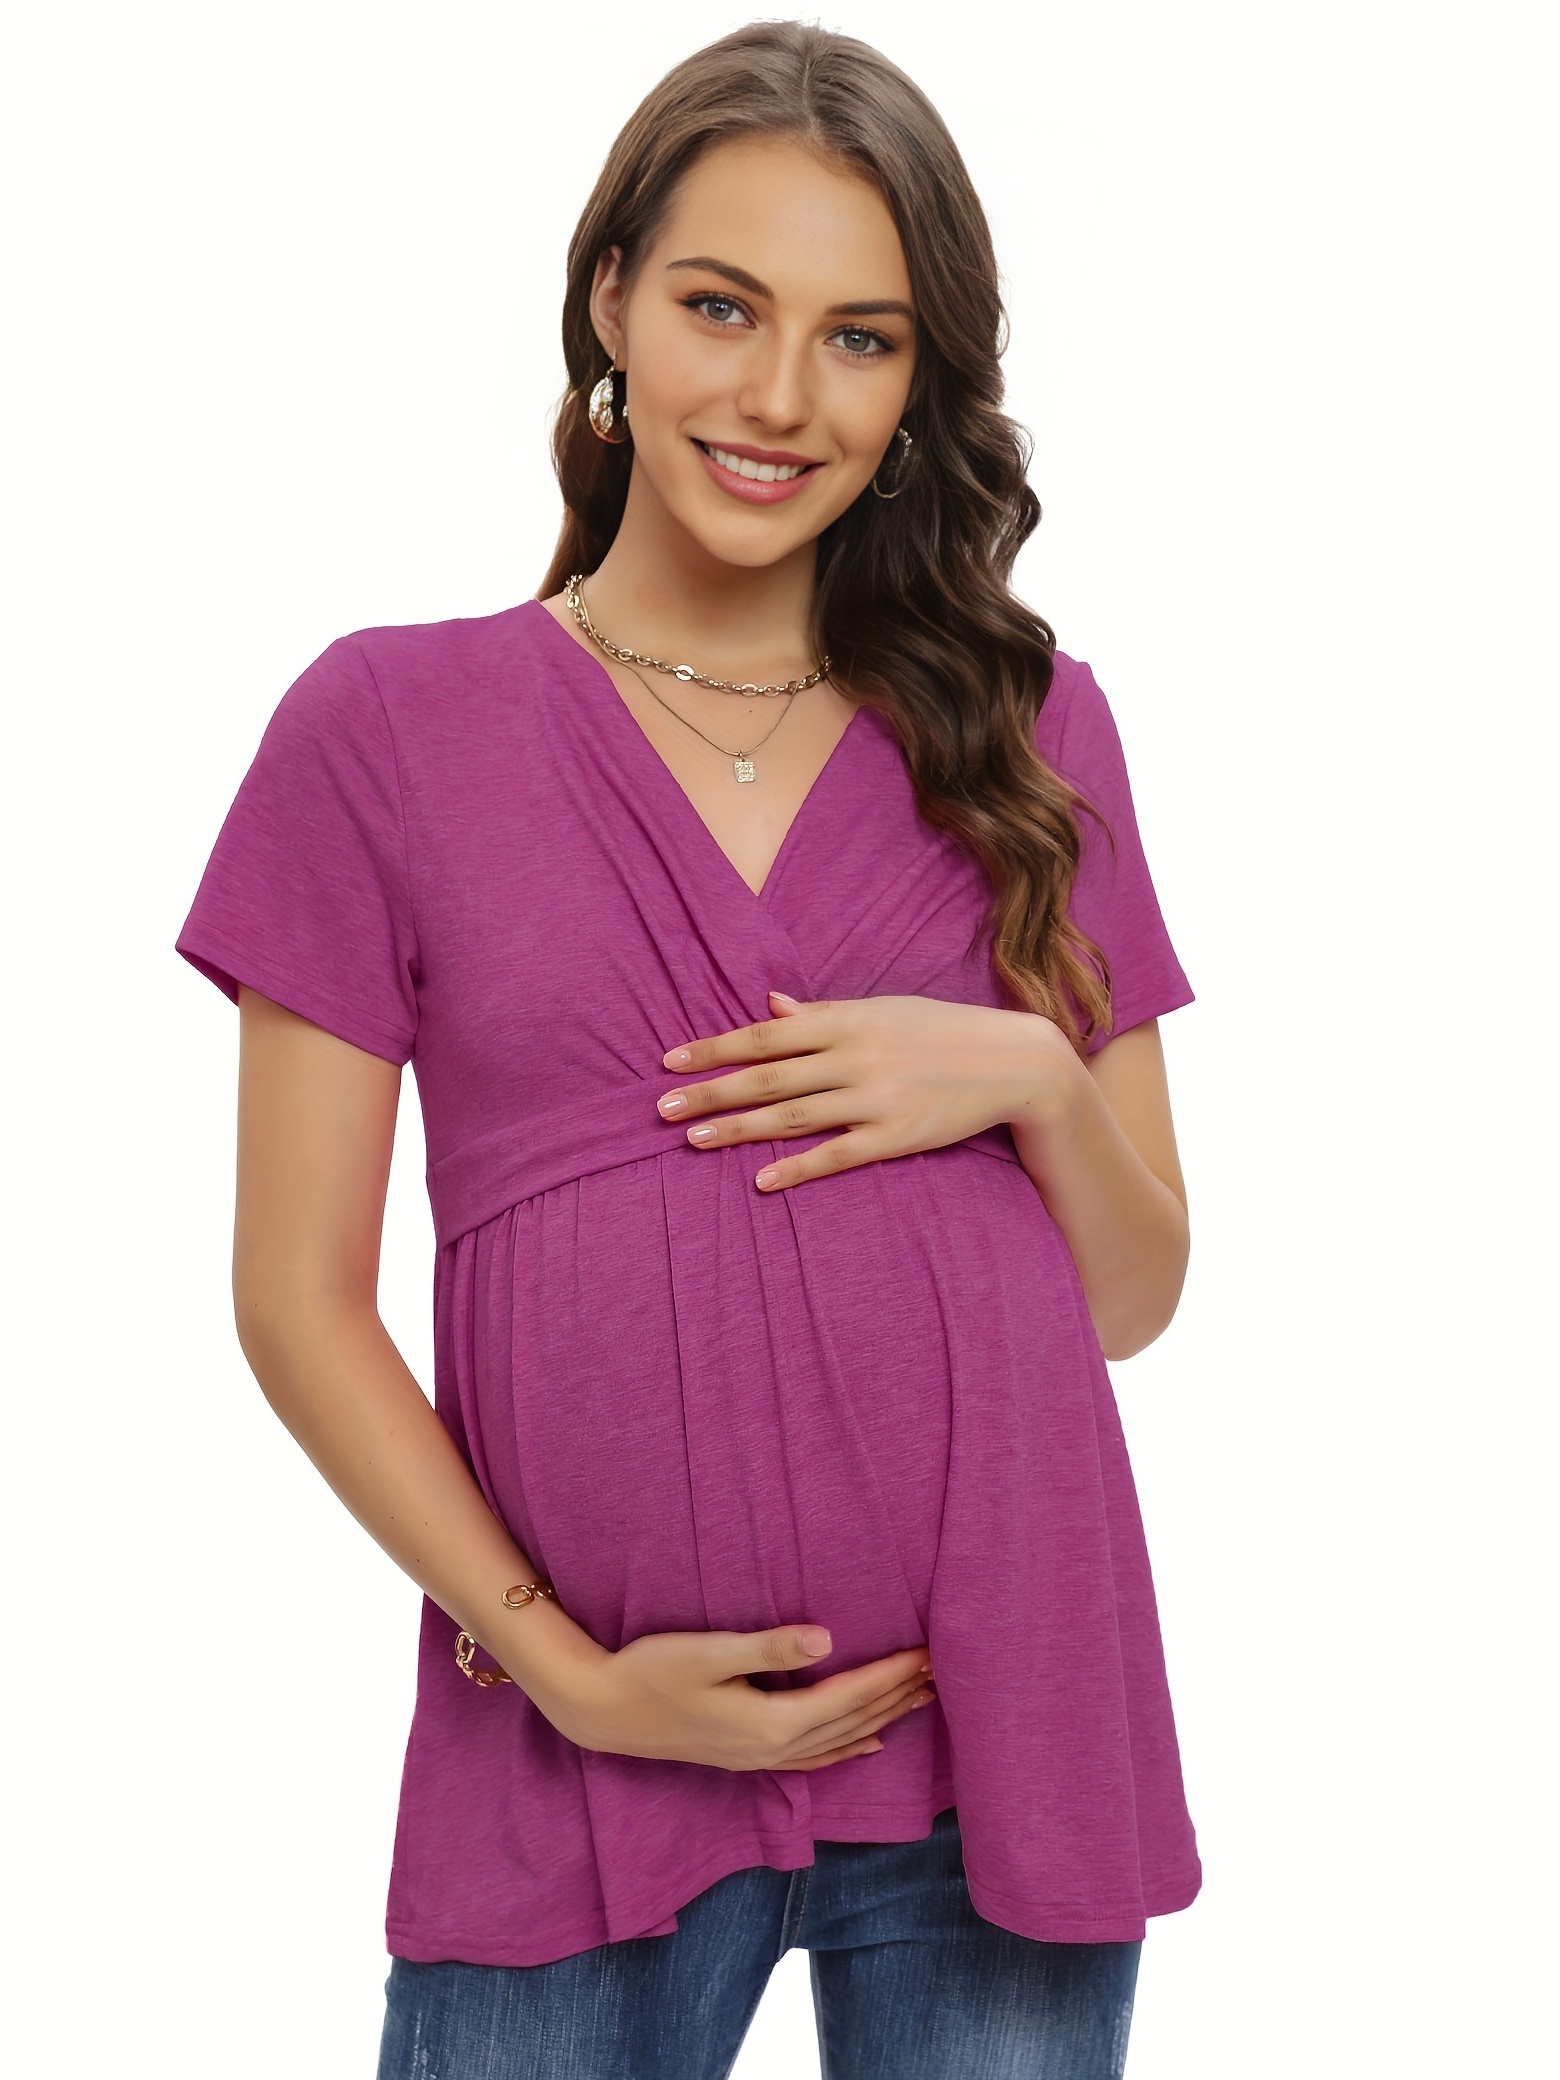 Nursing Clothes, Breastfeeding Tops, Postpartum